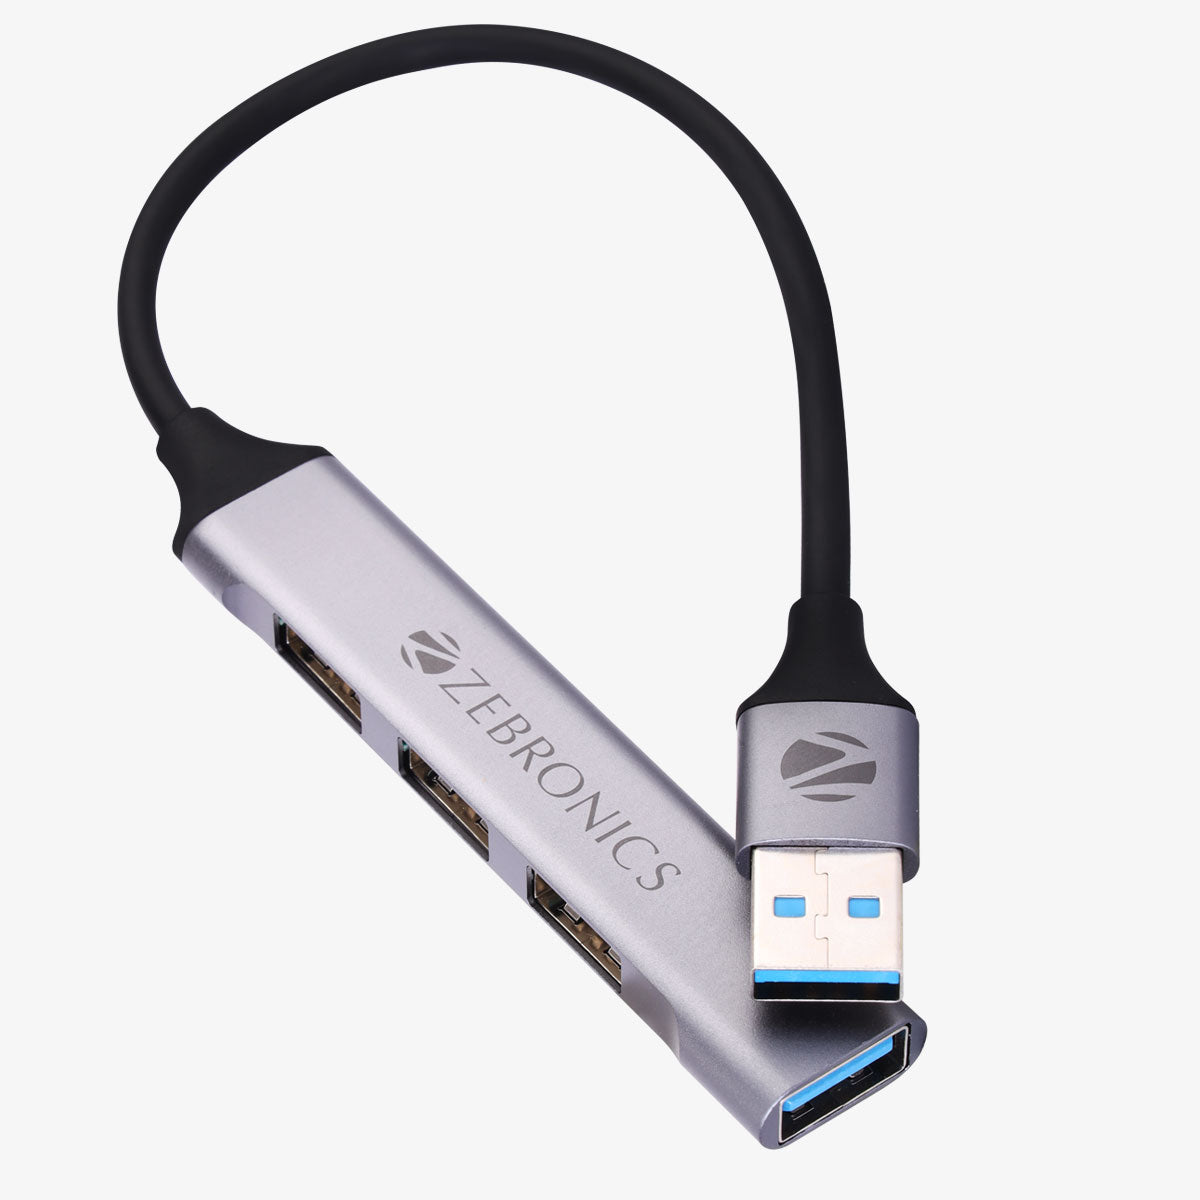 200HB - 4 Port USB Hub